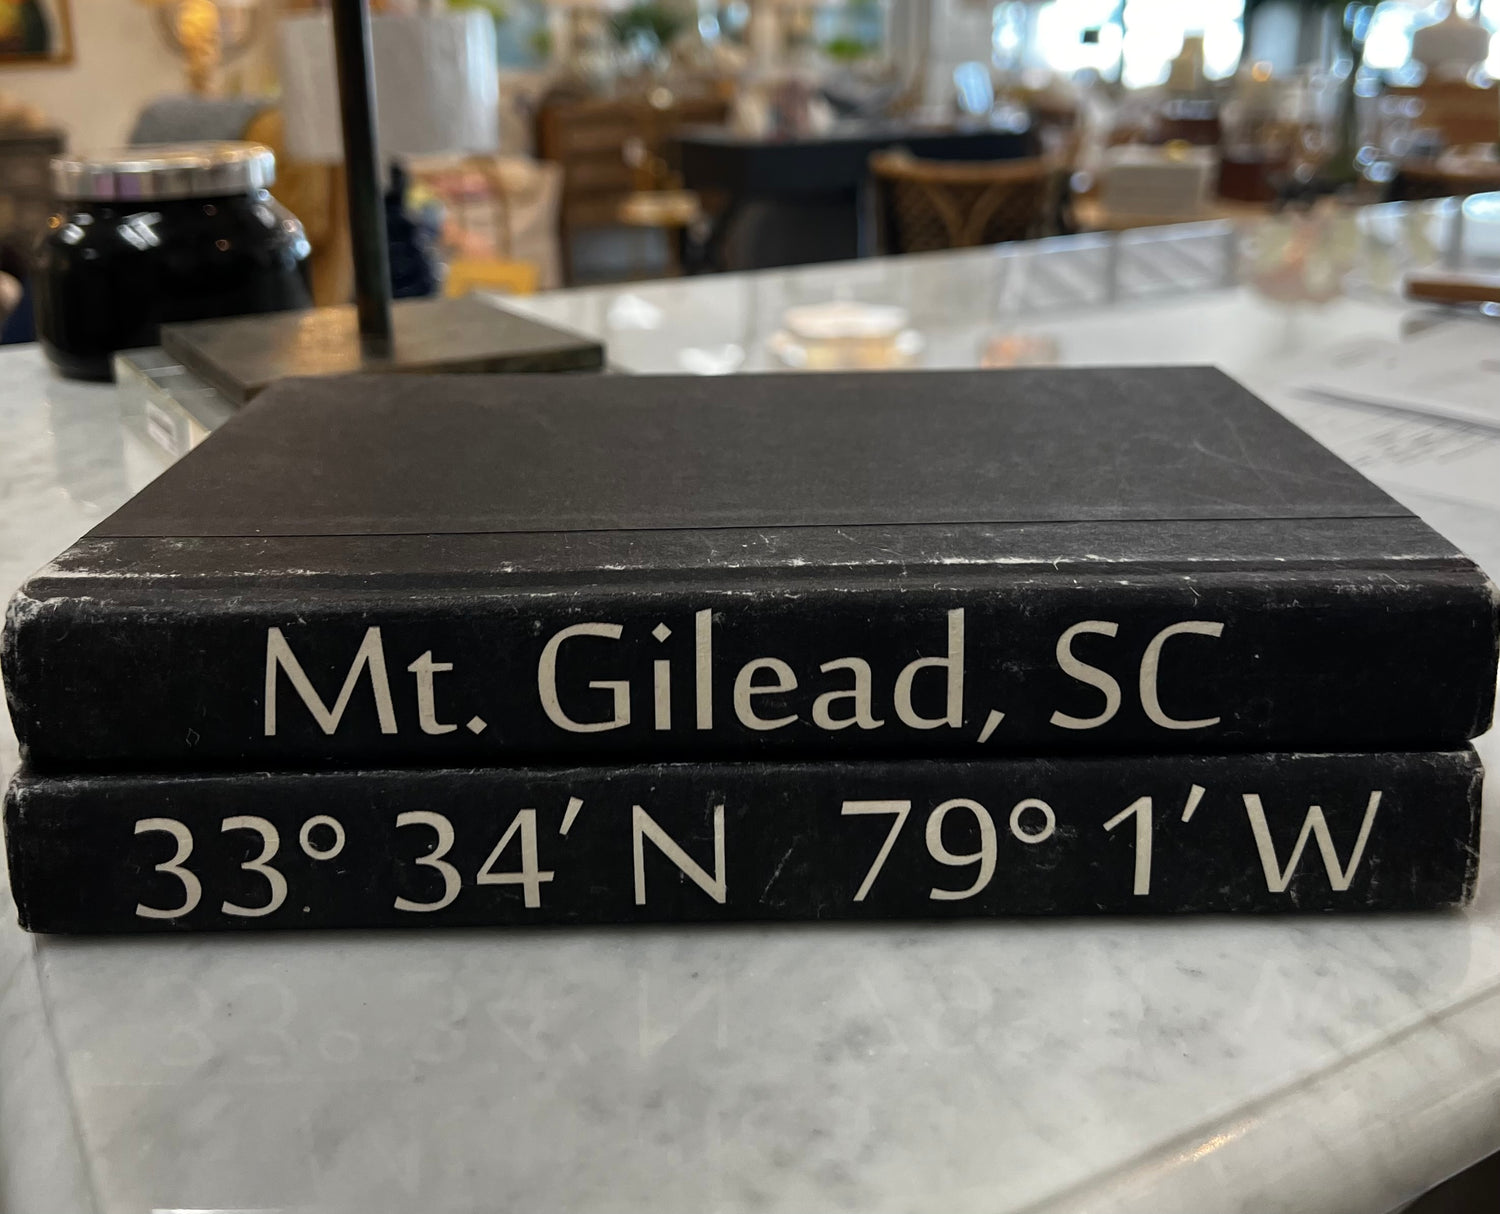 2 Vol City and Coordinates Book - Mt. Gilead